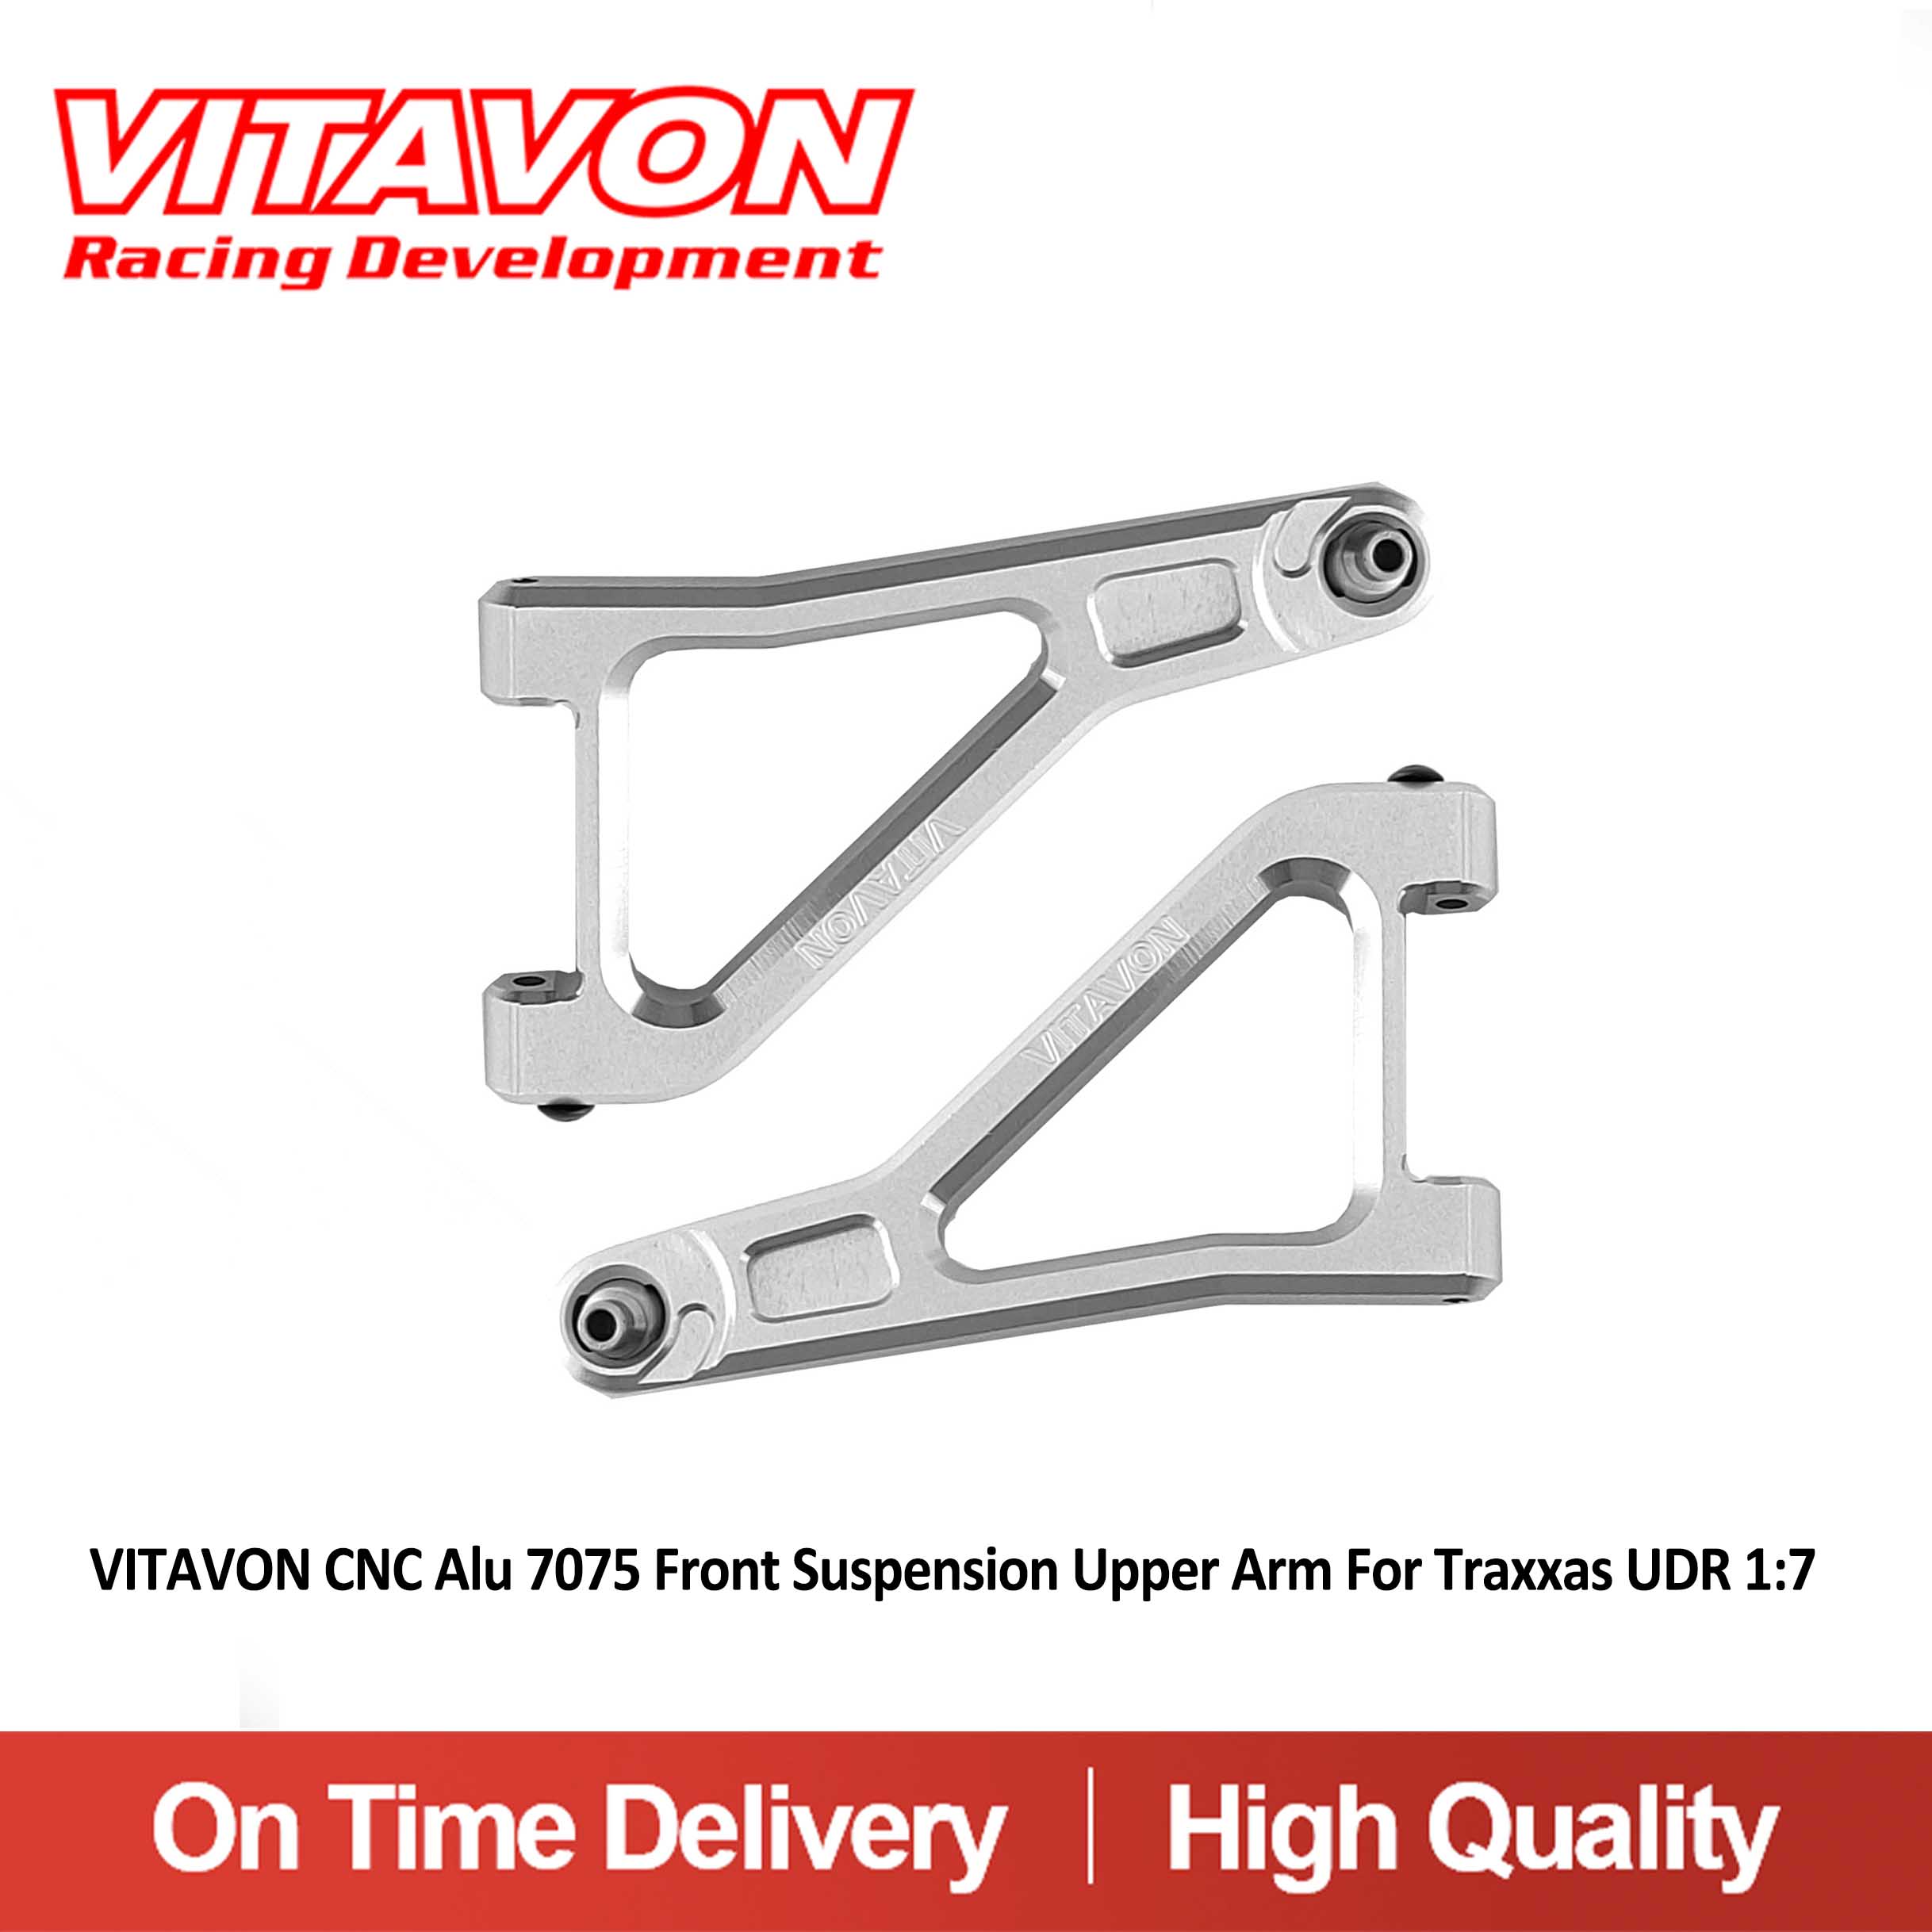 VITAVON CNC Alu 7075 Front Suspension Upper Arm For Traxxas UDR 1:7